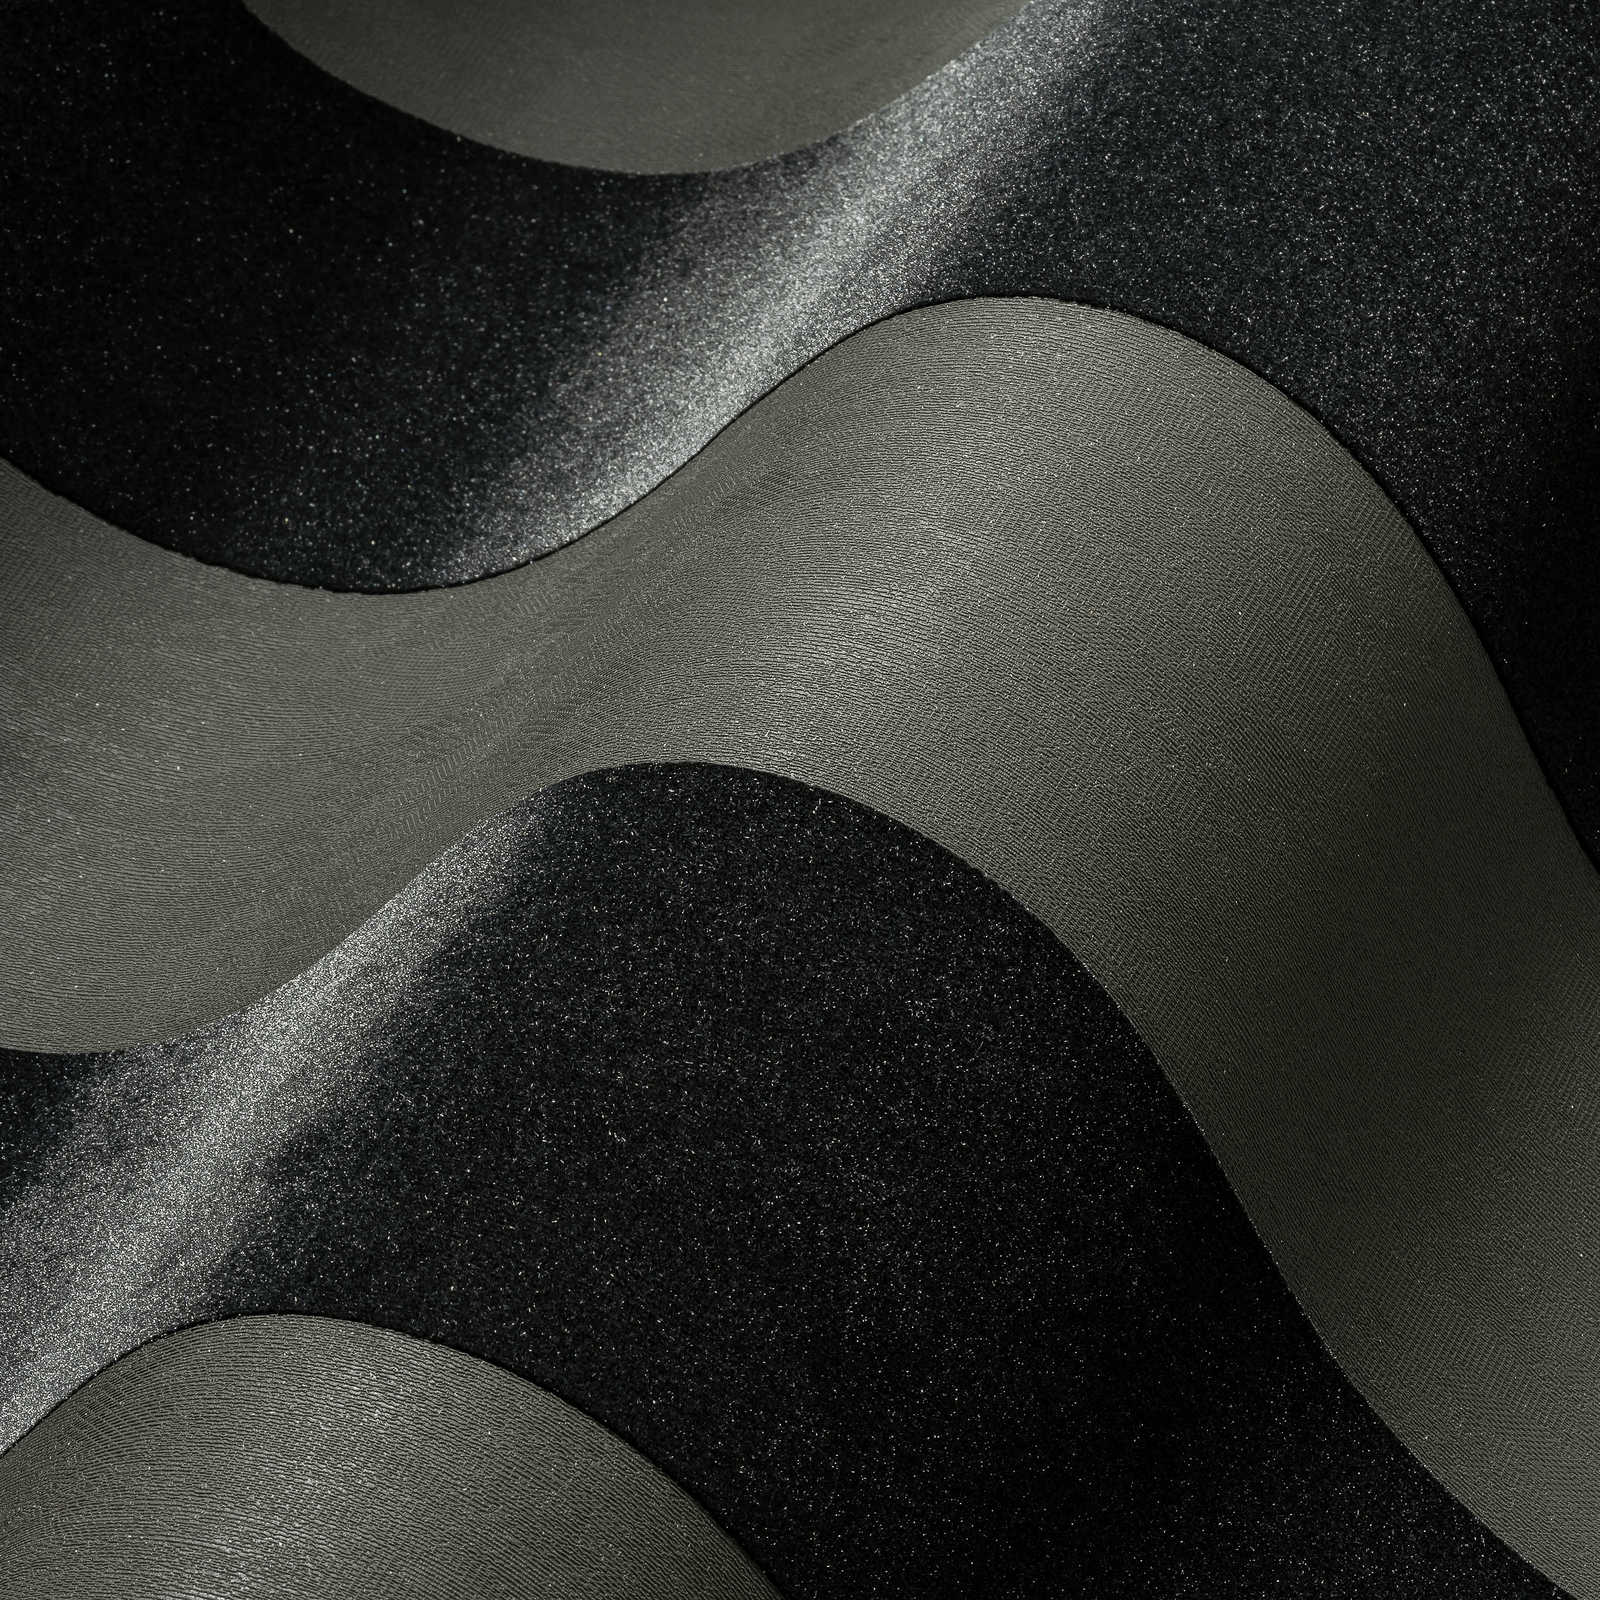             Black wallpaper block stripes & metallic effect
        